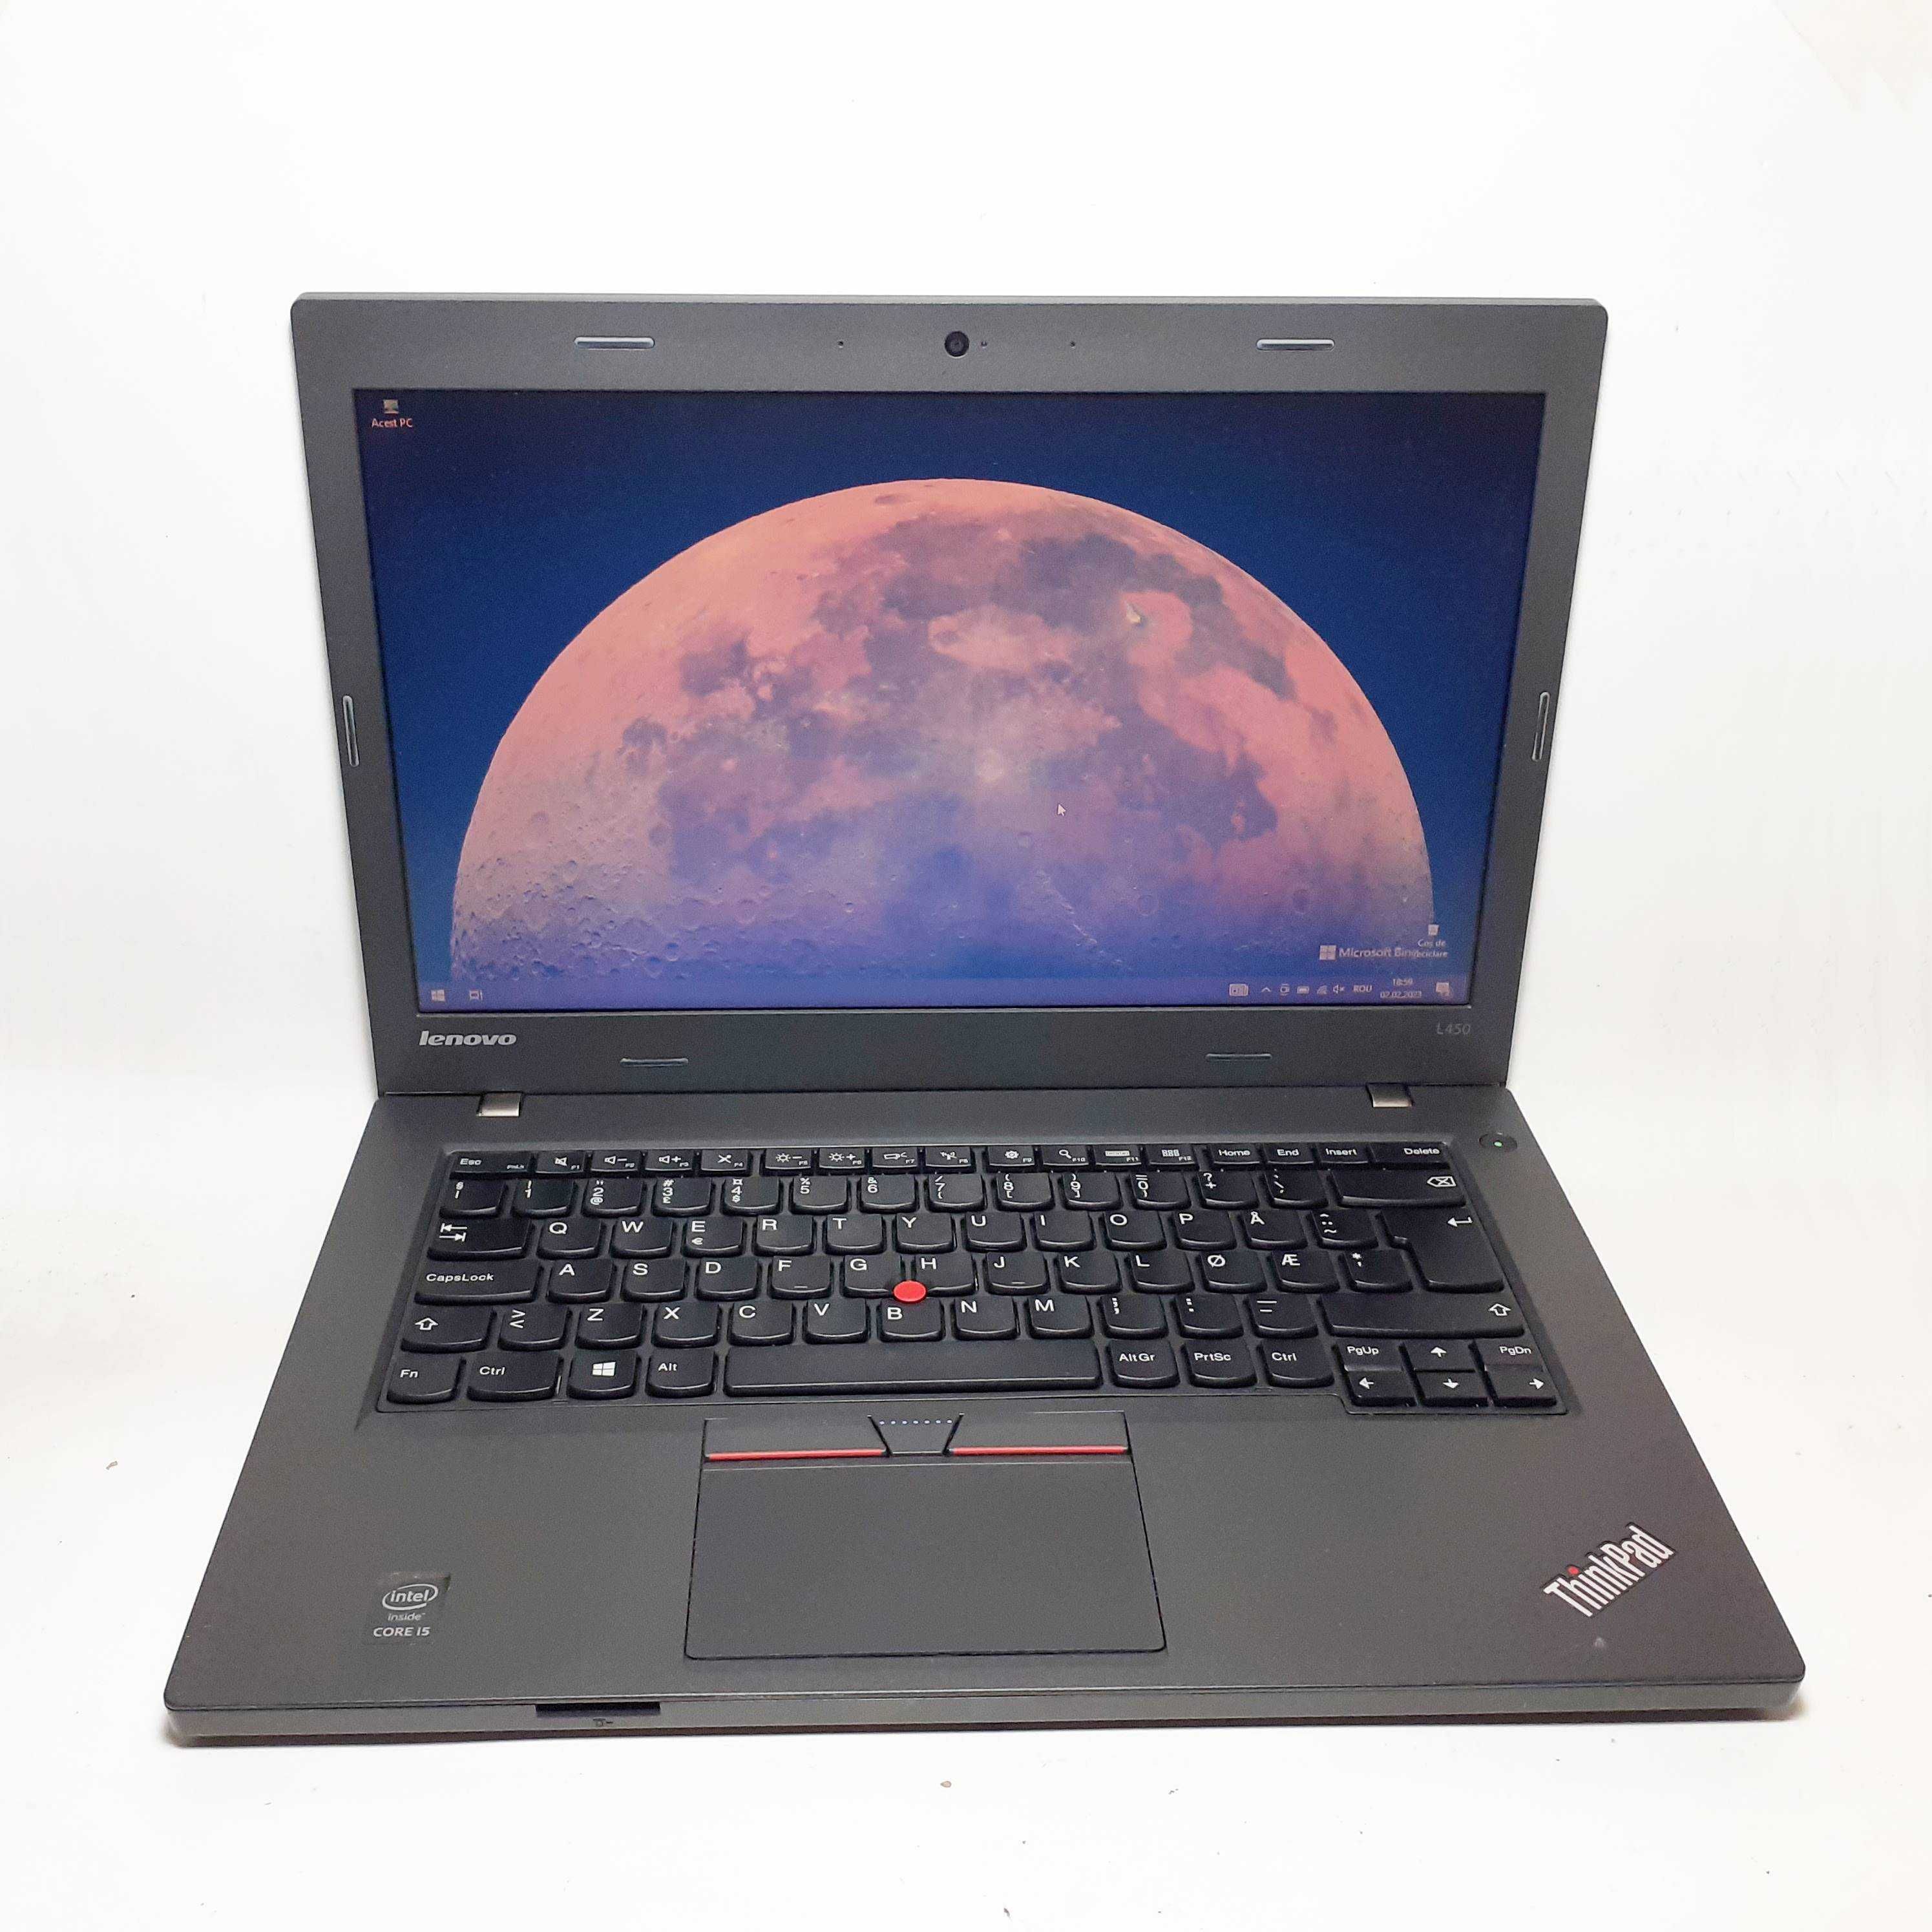 Lenovo ThinkPad L450 Intel i5 5200U 500GB 4GB DDR3 14 inci